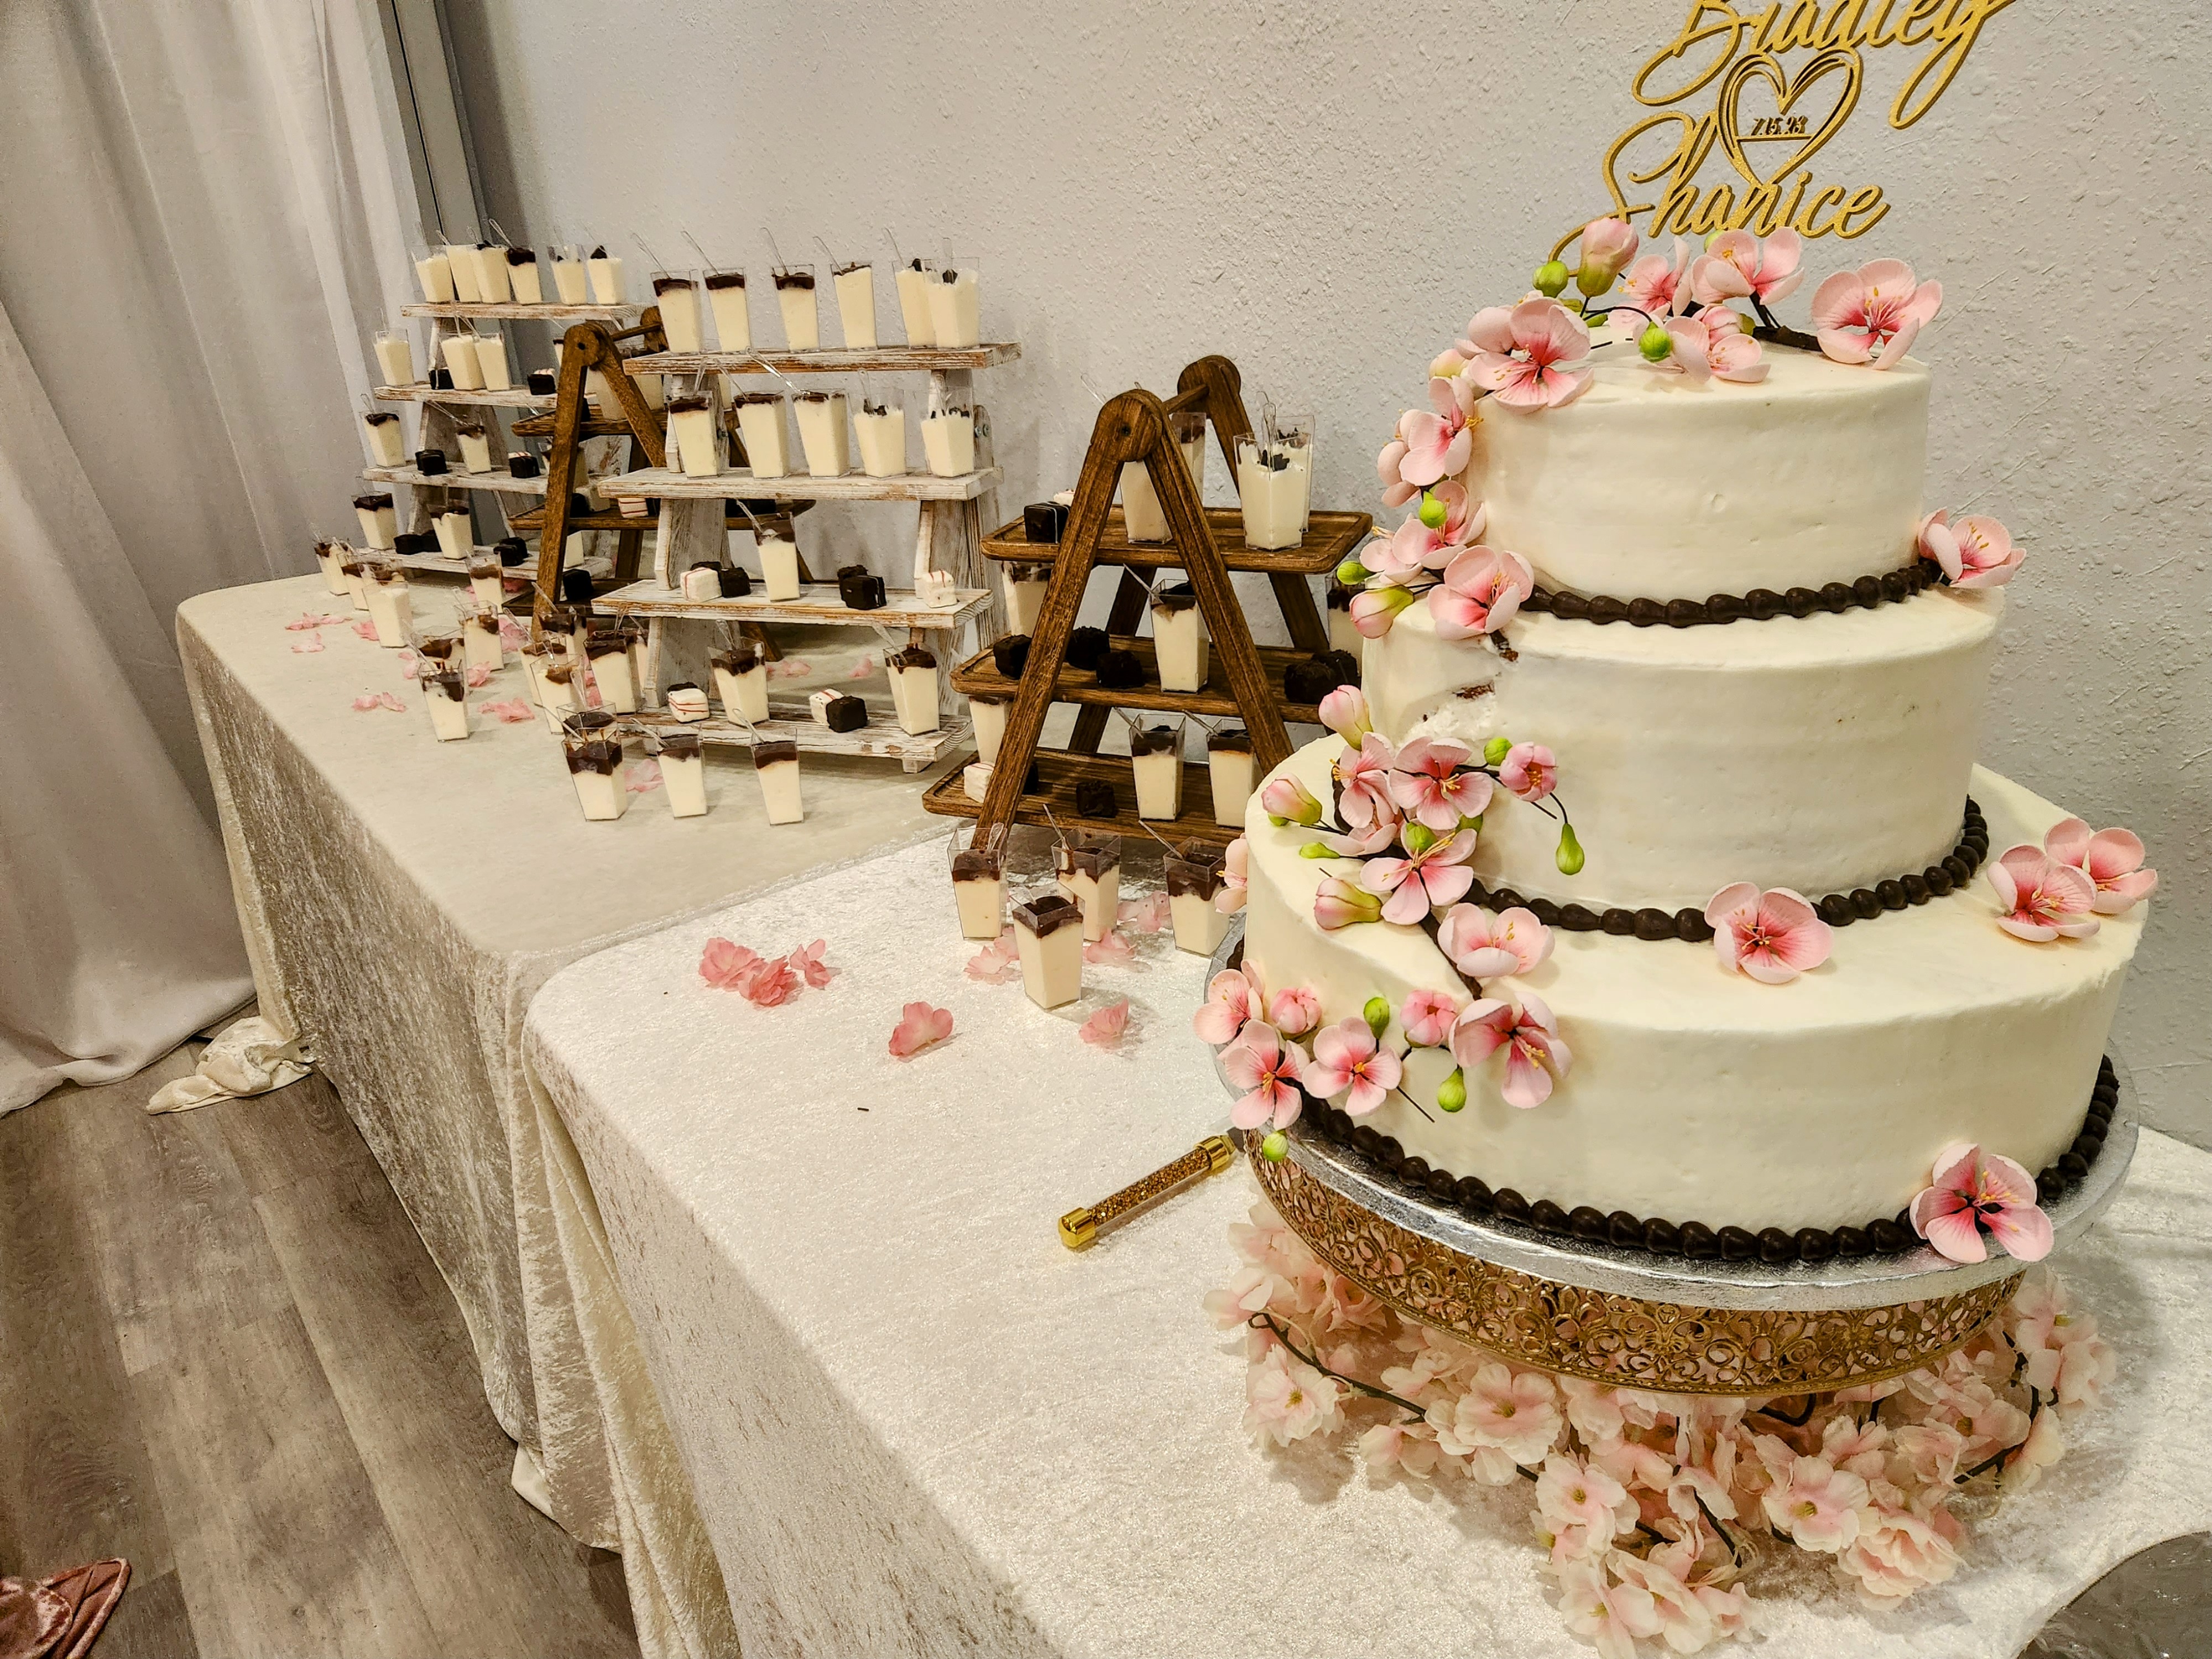 432-event-wedding-desert-display-cheesecake-wedding-cake-17000539740954.jpg